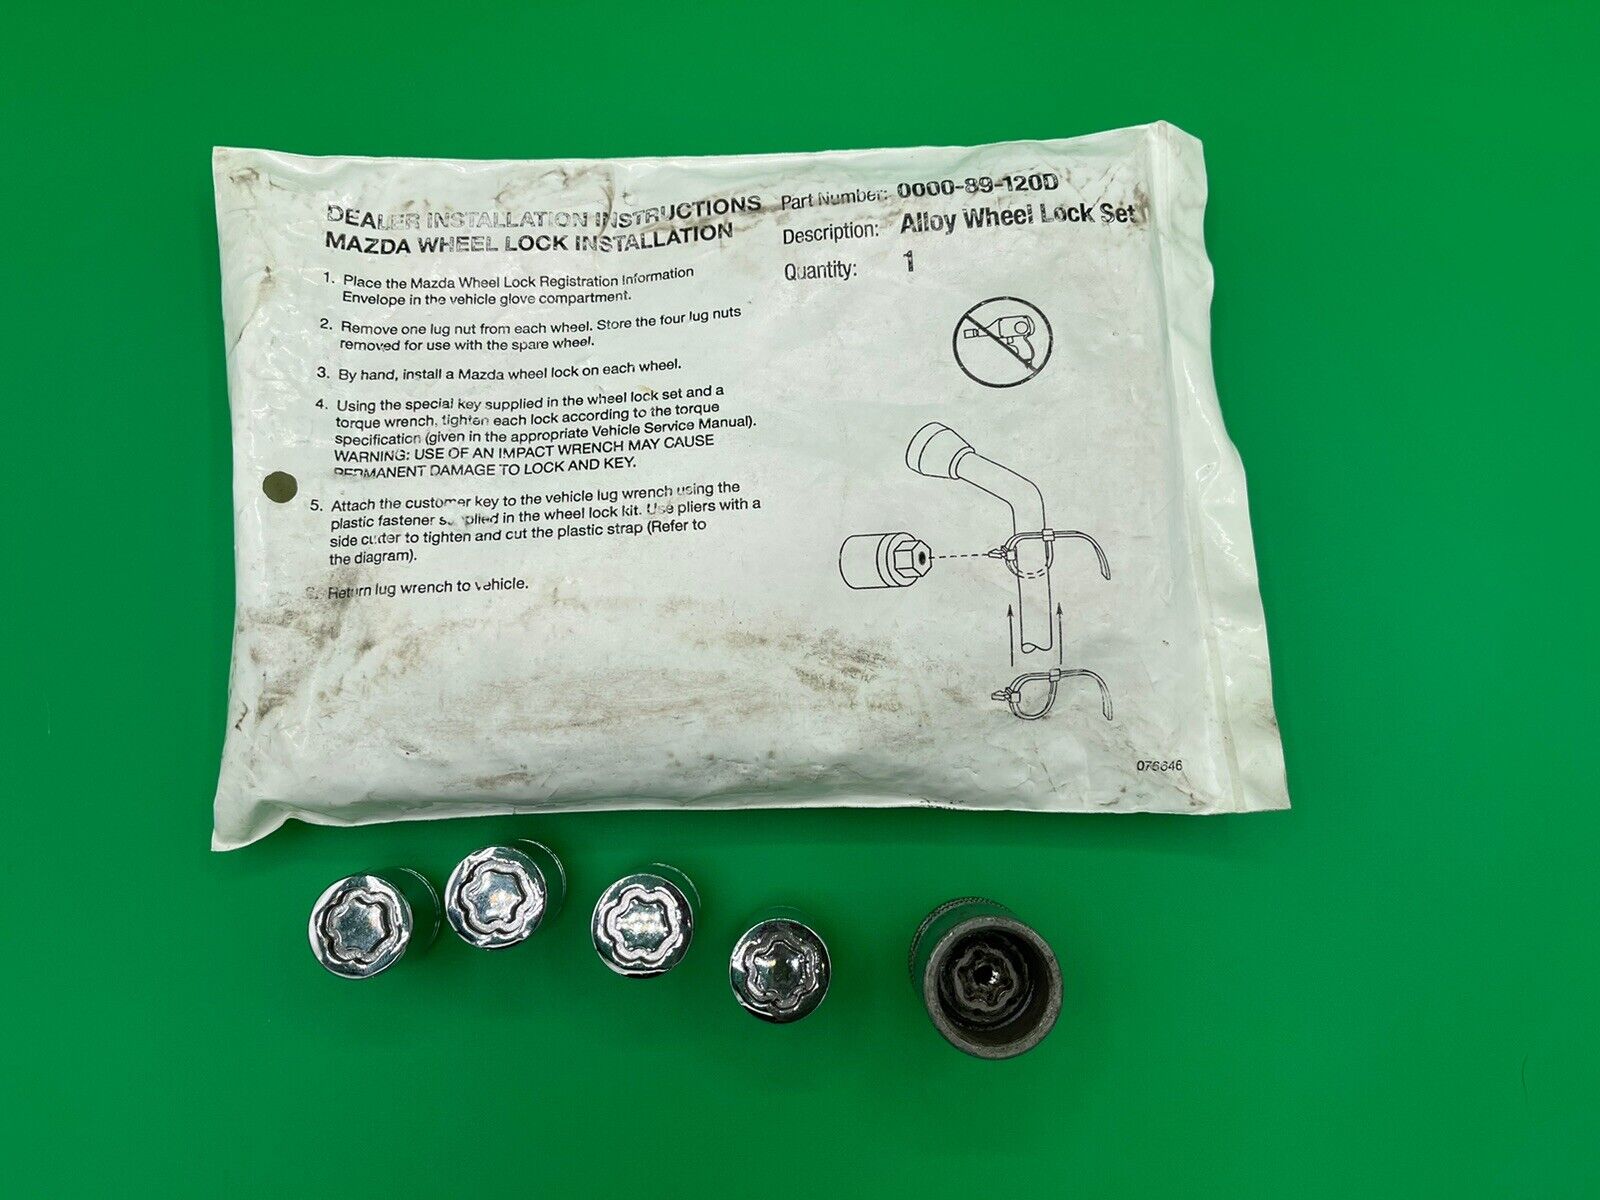 Mazda OEM Aloy Wheel Lock Set 0000-59-120D UNUSED in pouch PASSENGER CARS